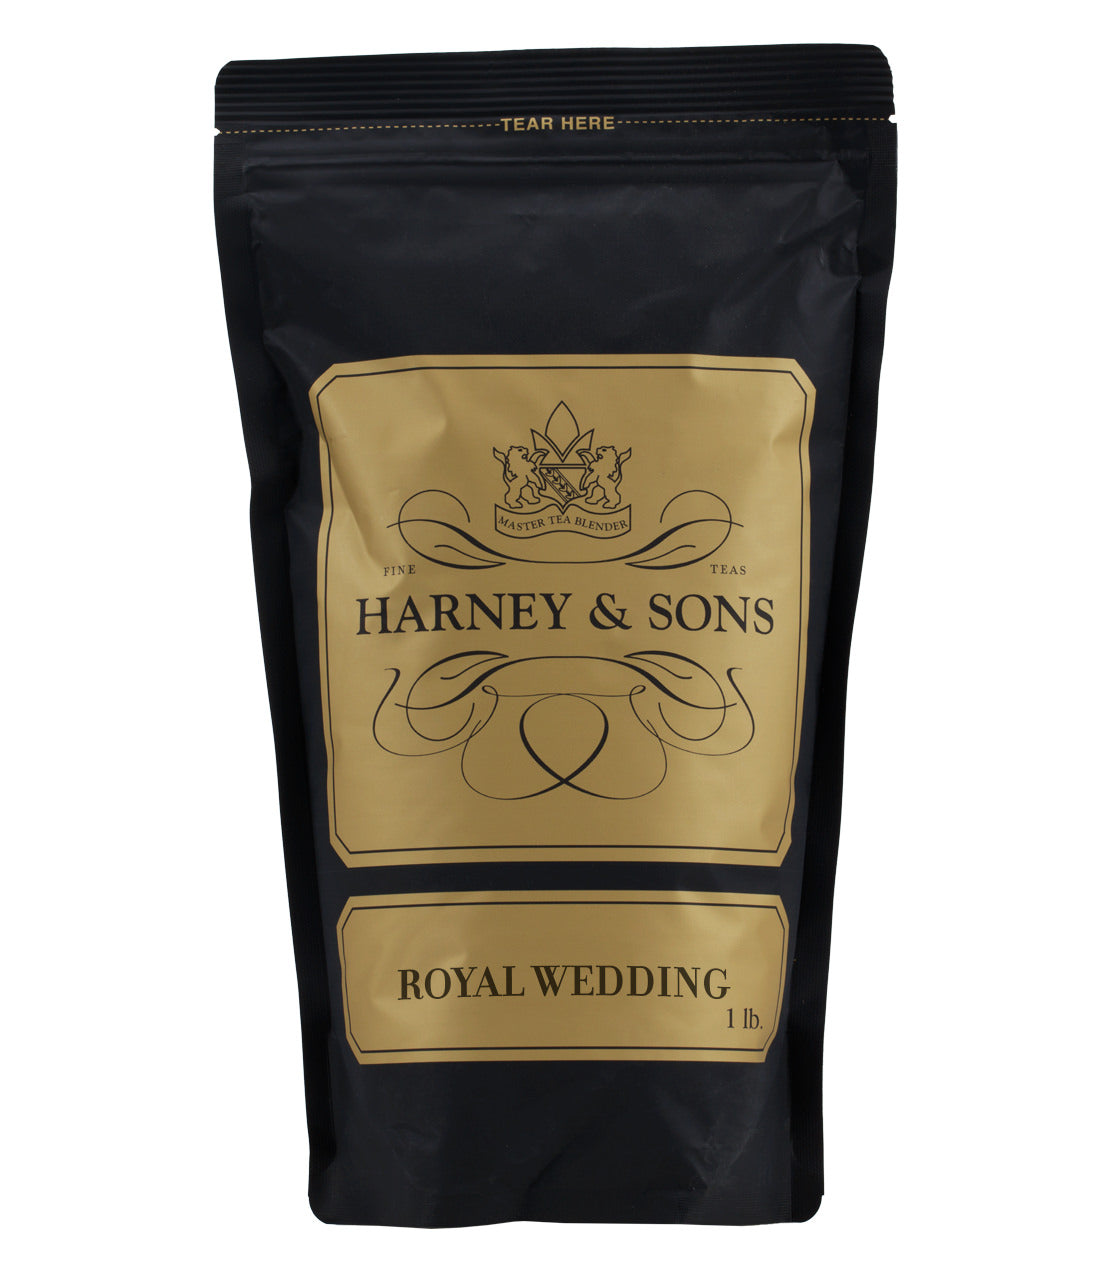 Royal Wedding Tea - Loose 1 lb. Bag - Harney & Sons Fine Teas